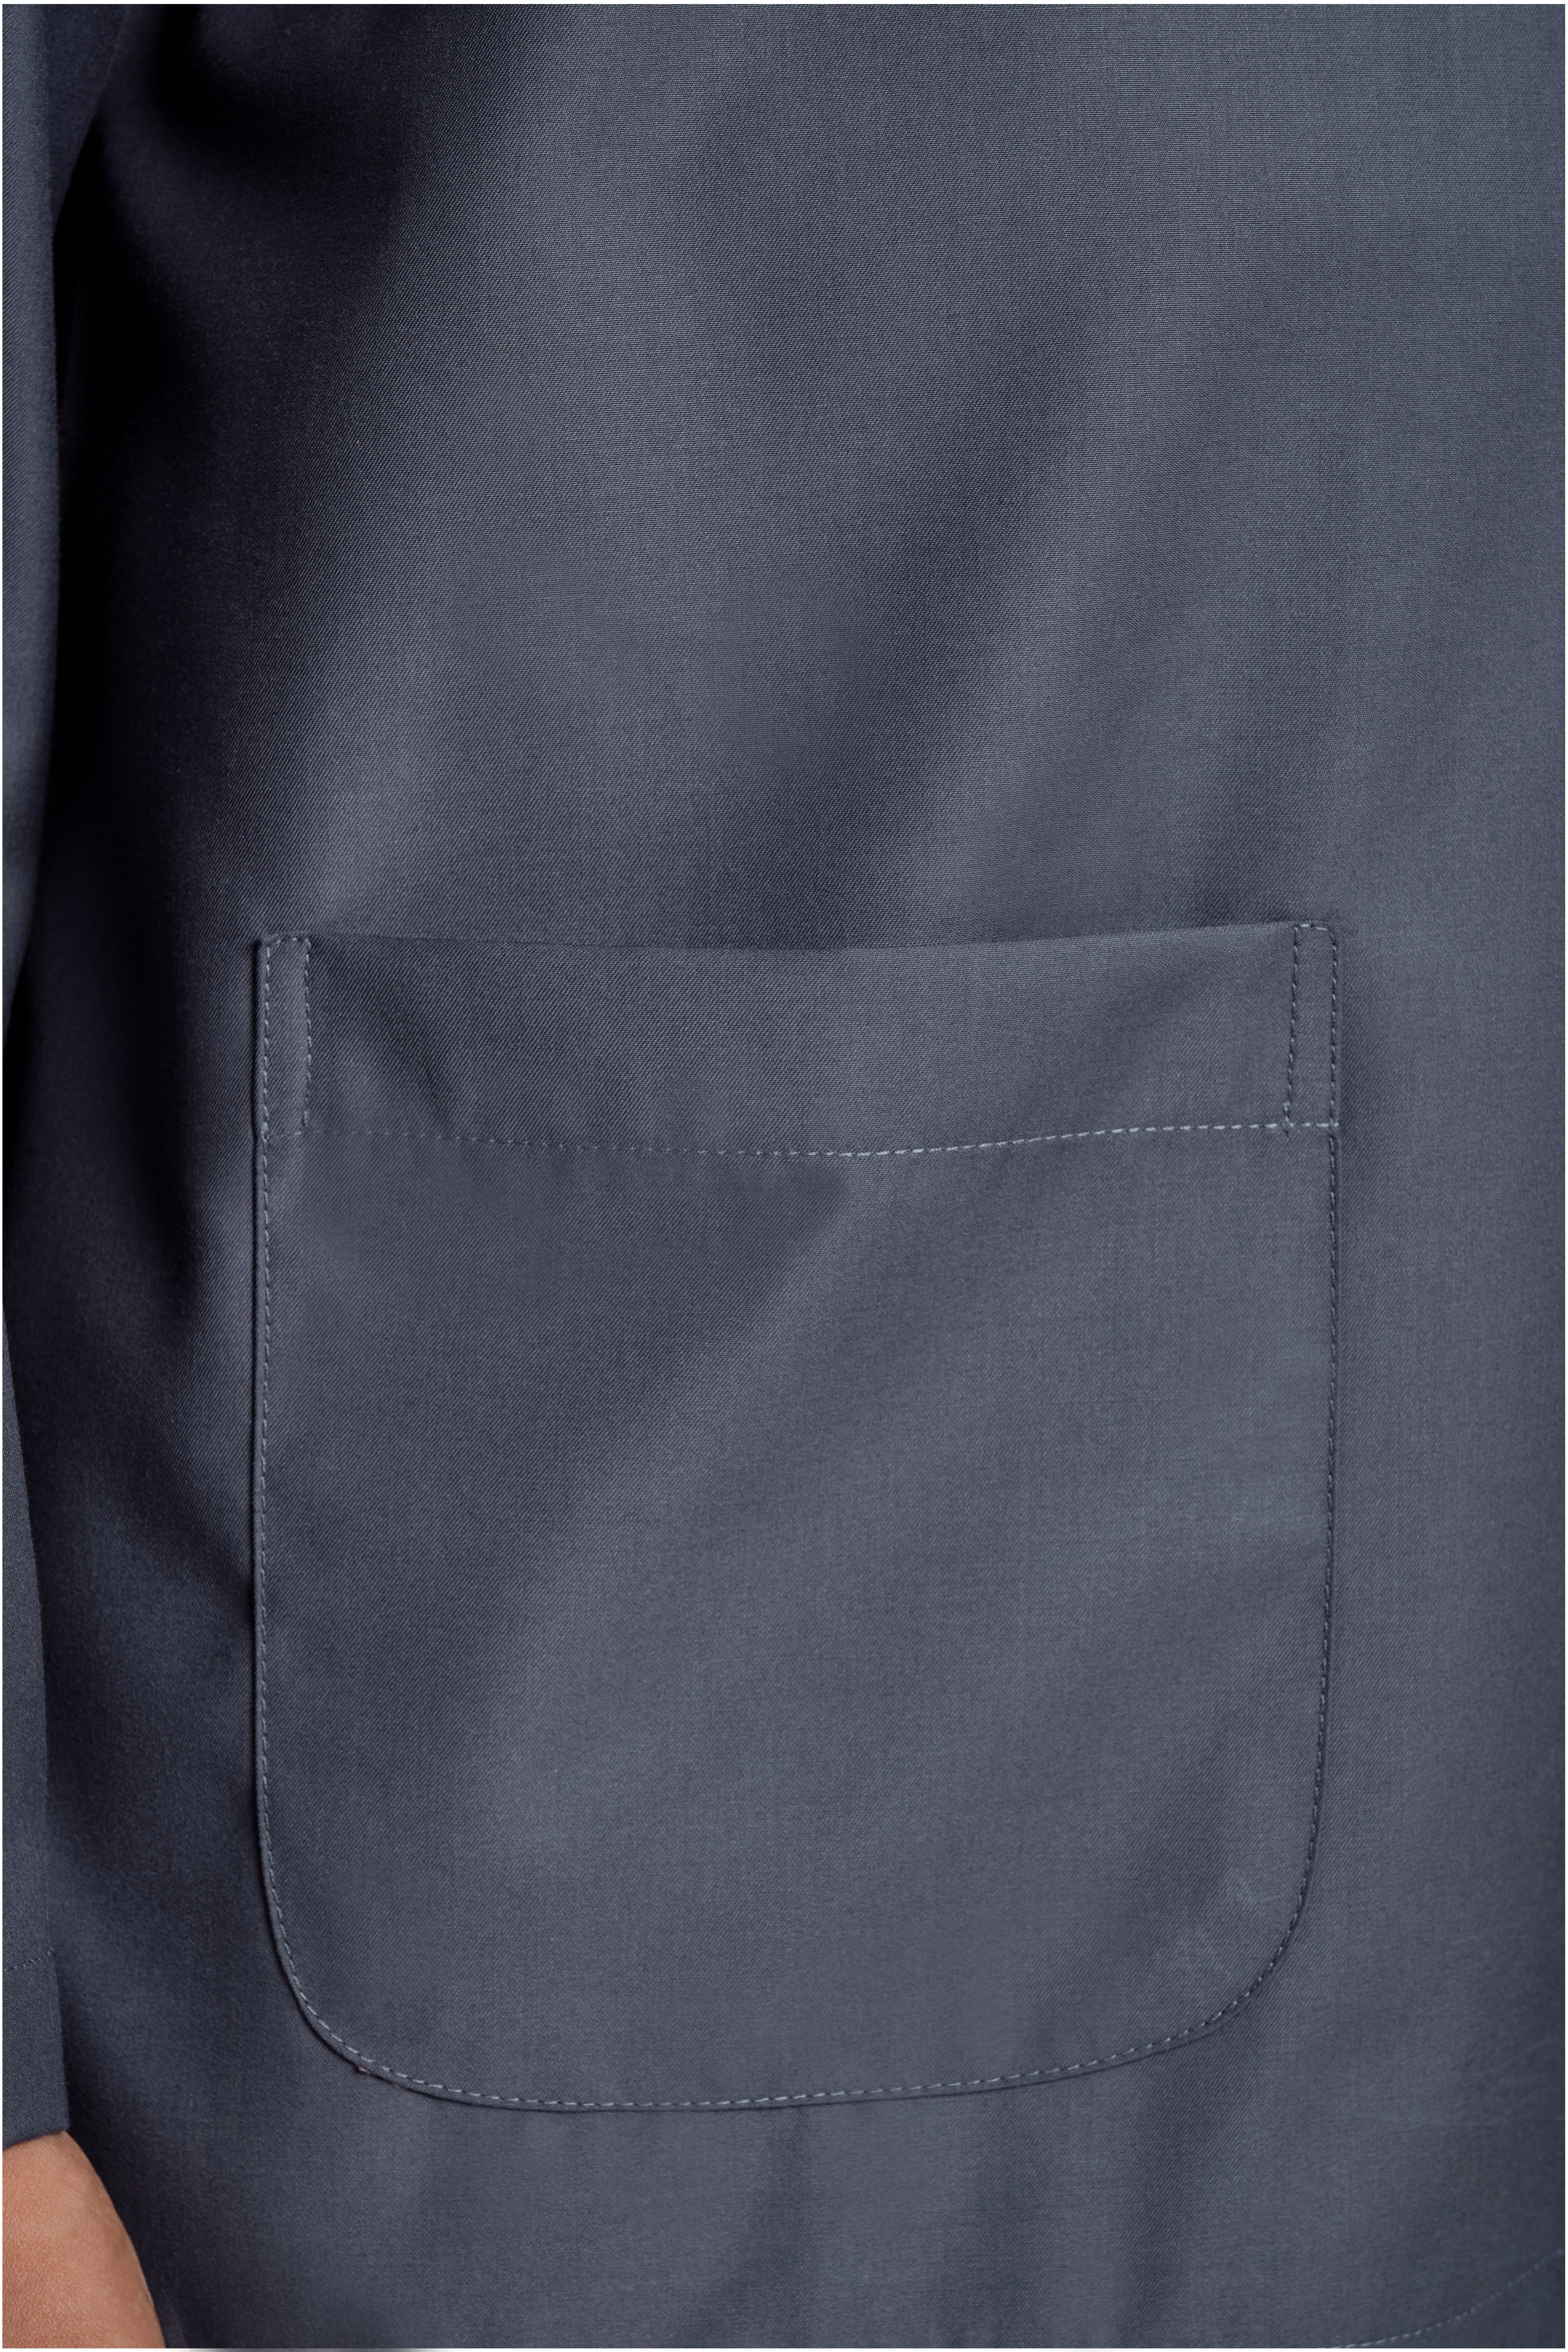 Patawali Classic Fit Baju Melayu Teluk Belanga - Iron Grey